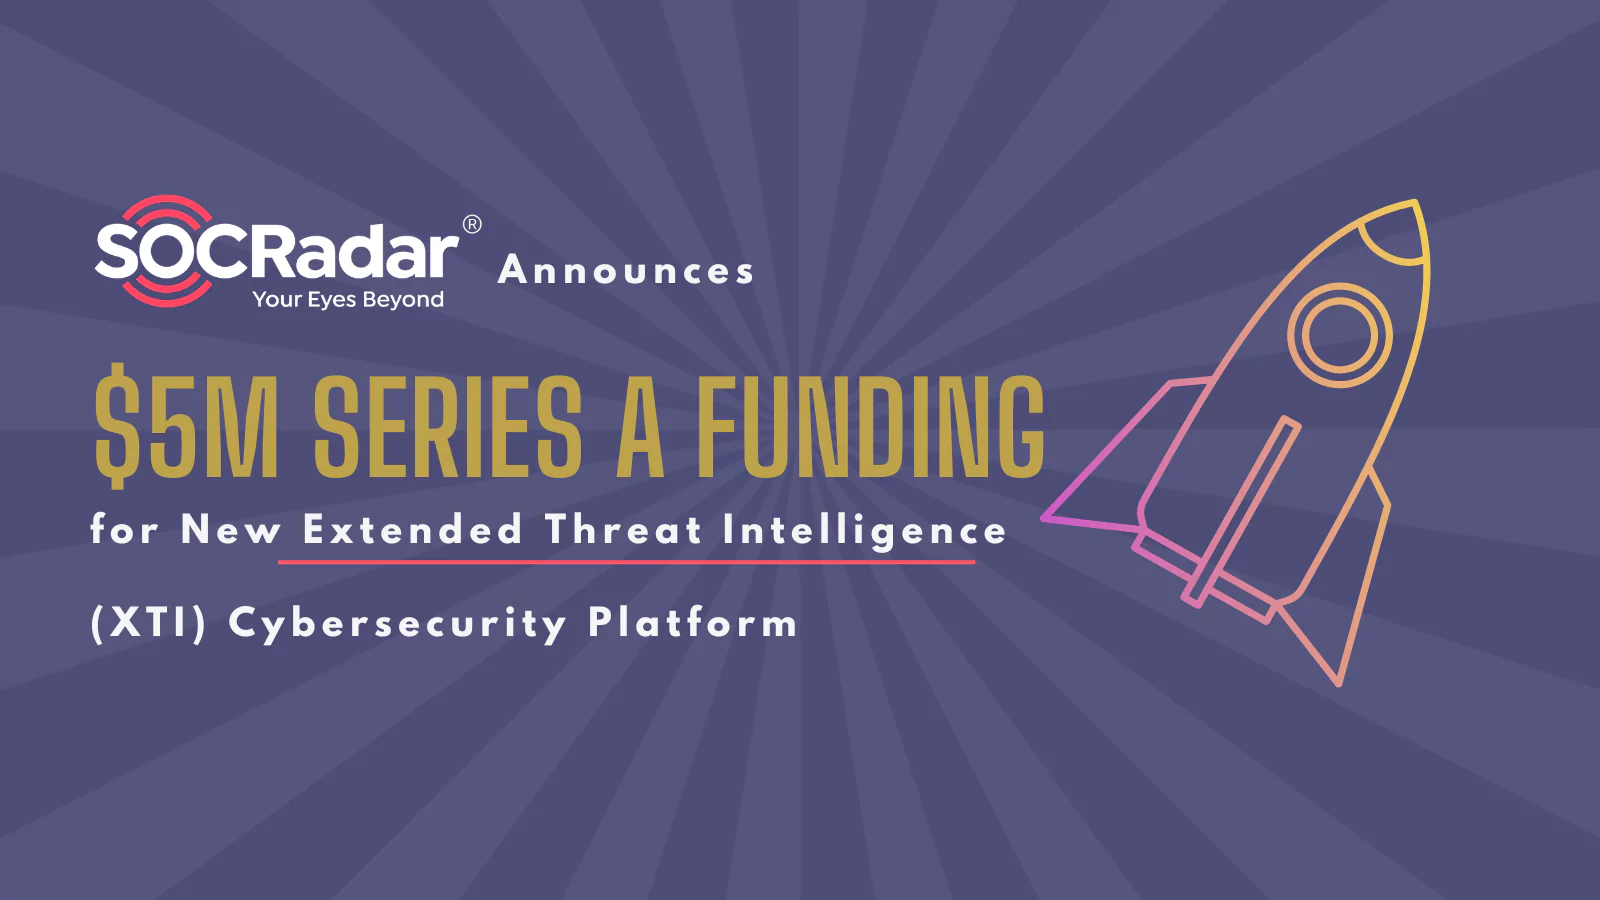 SOCRadar® Cyber Intelligence Inc. | SOCRadar Announces $5M Series A Funding for New Extended Threat Intelligence (XTI) Cybersecurity Platform